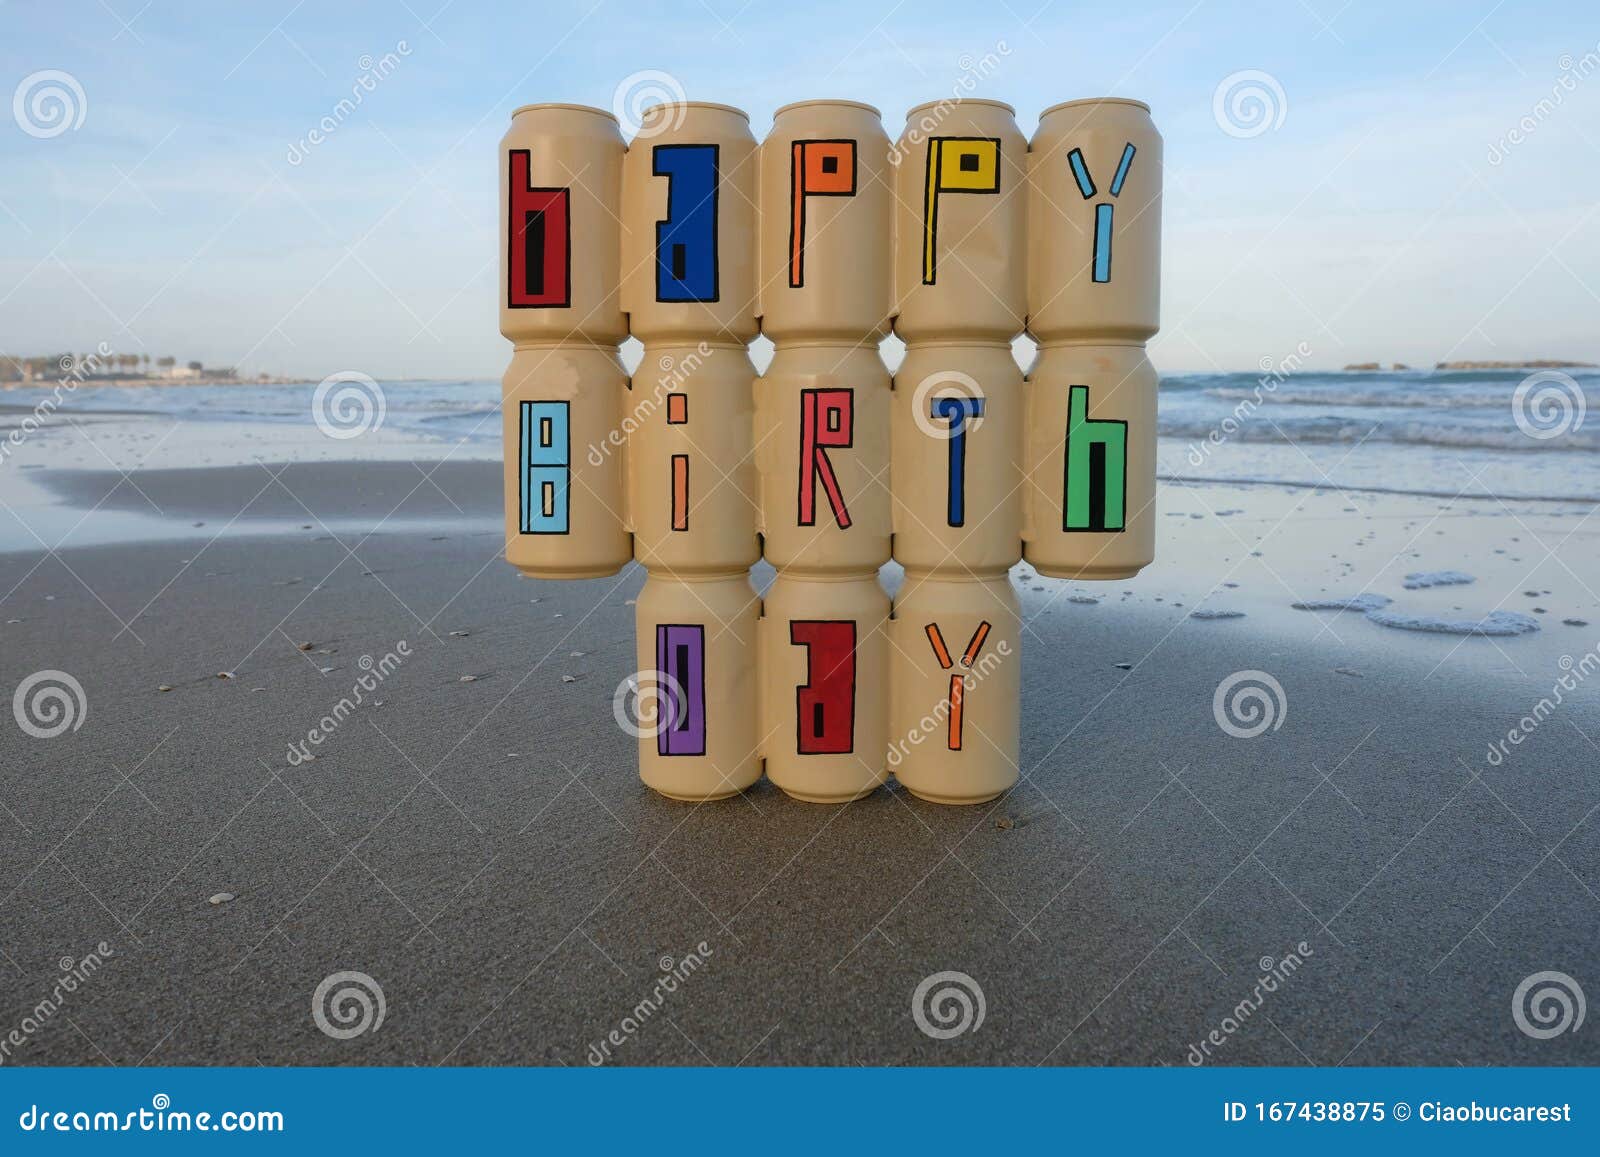 Birthday Card Card for Her Birthday Beach//Funny Birthday Card Funny Birthday Card Birthday Card for Friend 